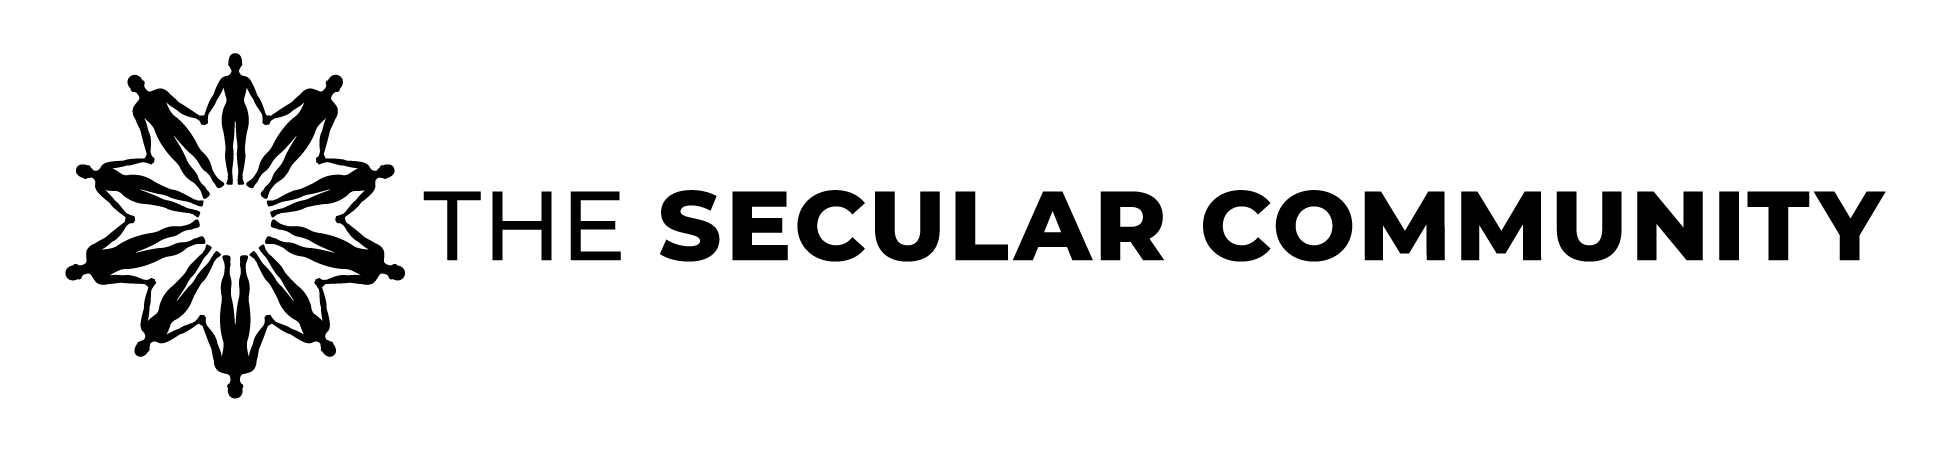 The Secular Community logo